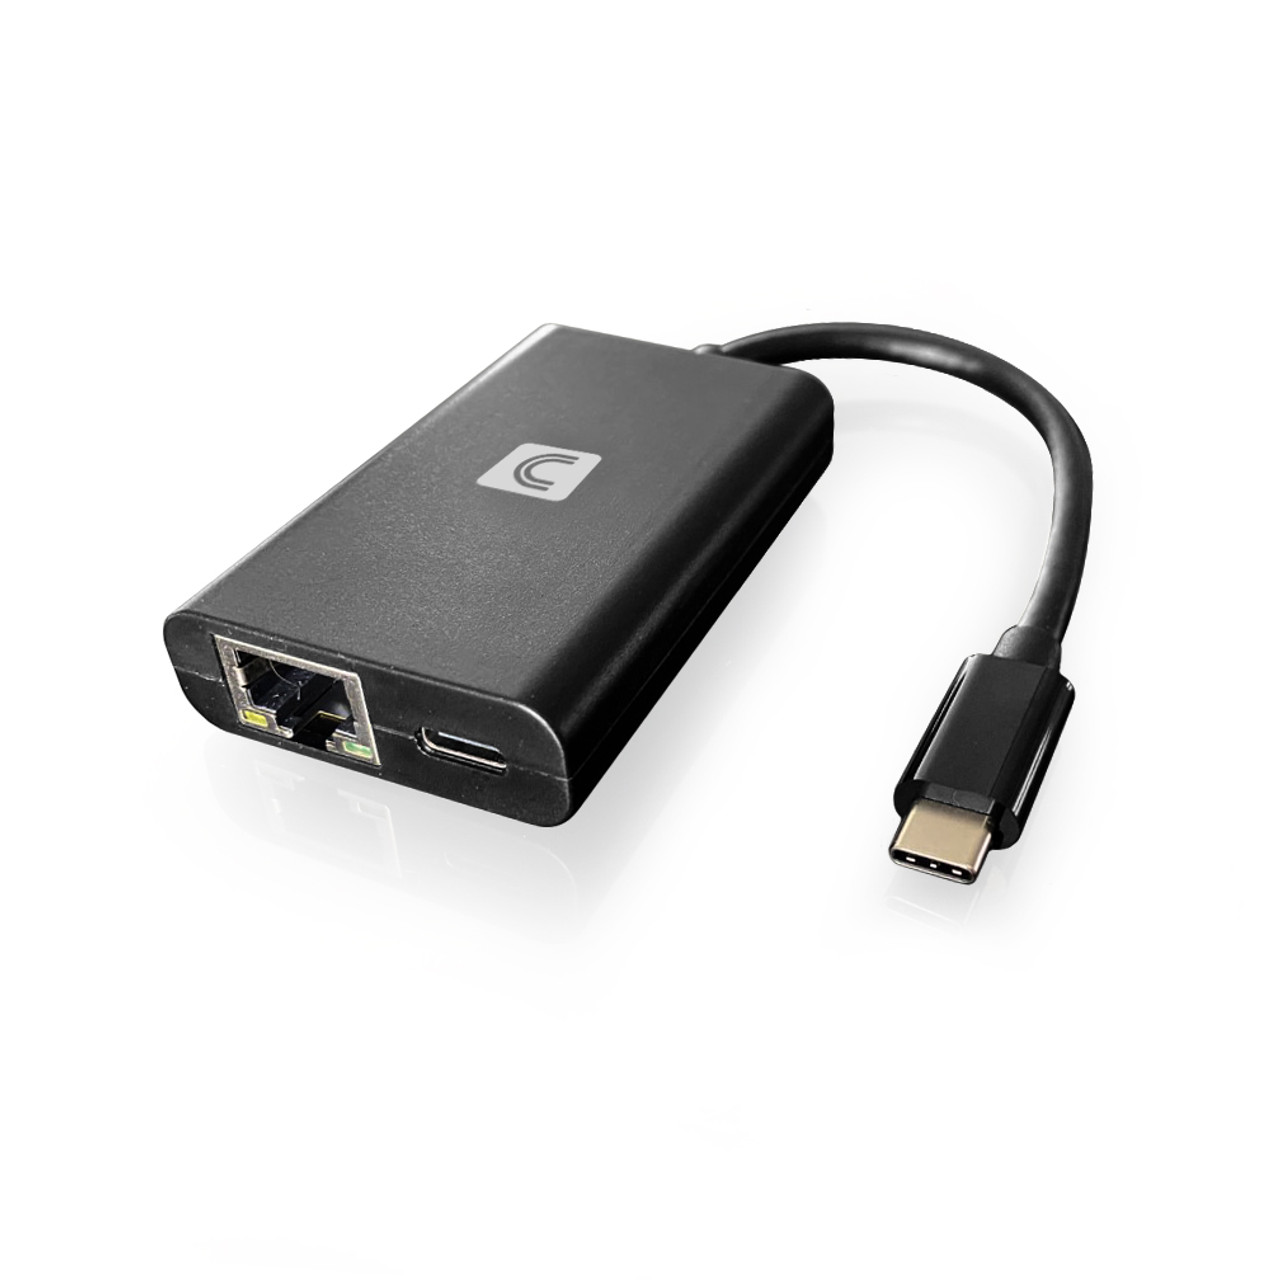 USB 3.0 vers HDMI VGA adaptateur double sortie USB vers VGA HDMI